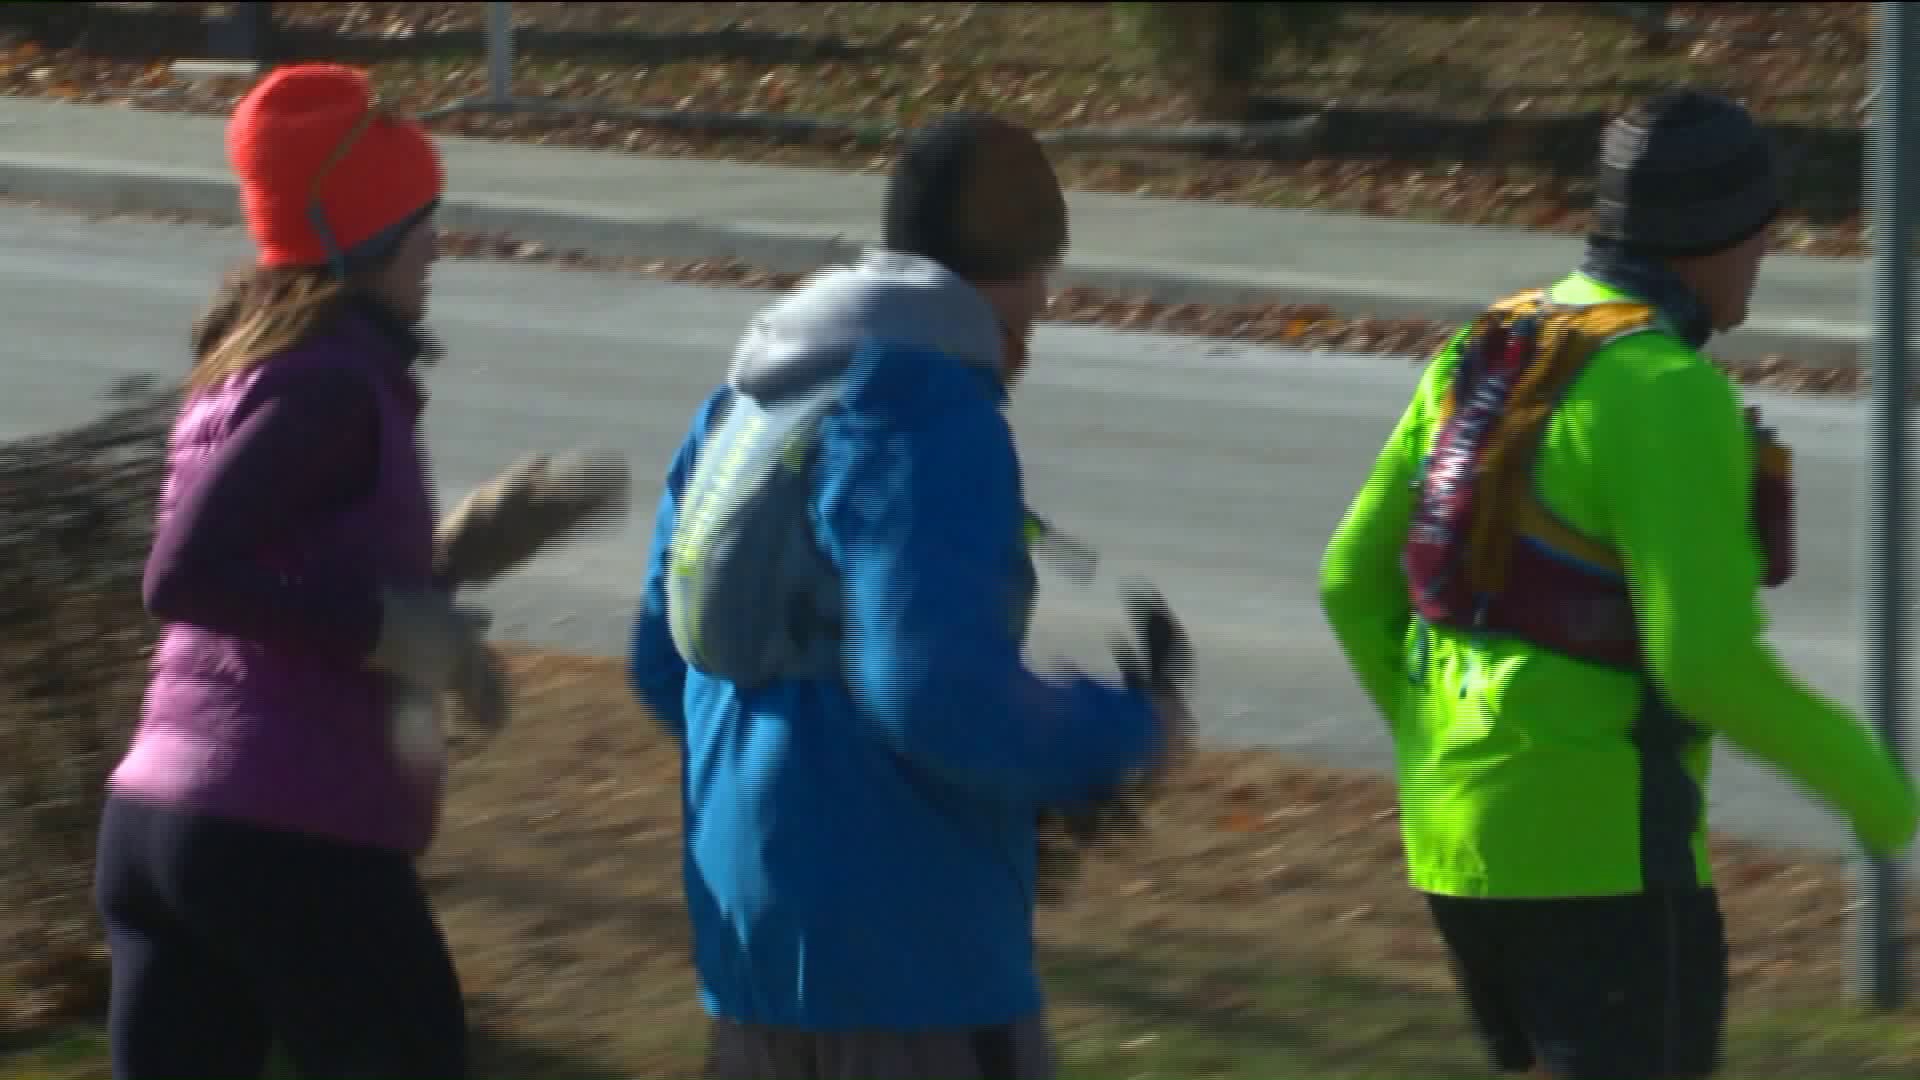 Two Connecticut men running 500 miles to raise awareness of veteran suicide